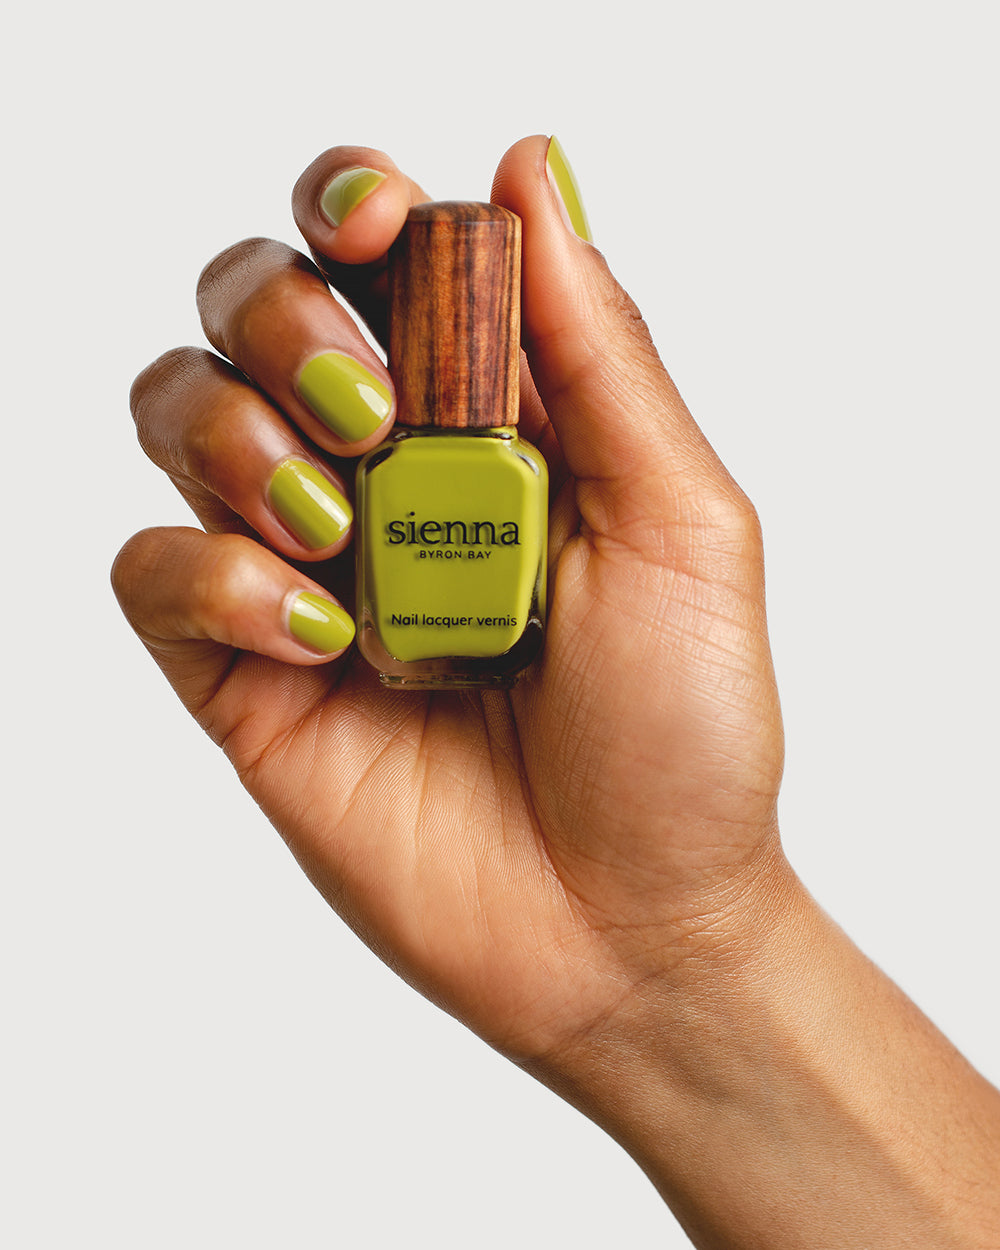 Avocado green nail polish hand swatch on medium skin tone holding sienna bottle